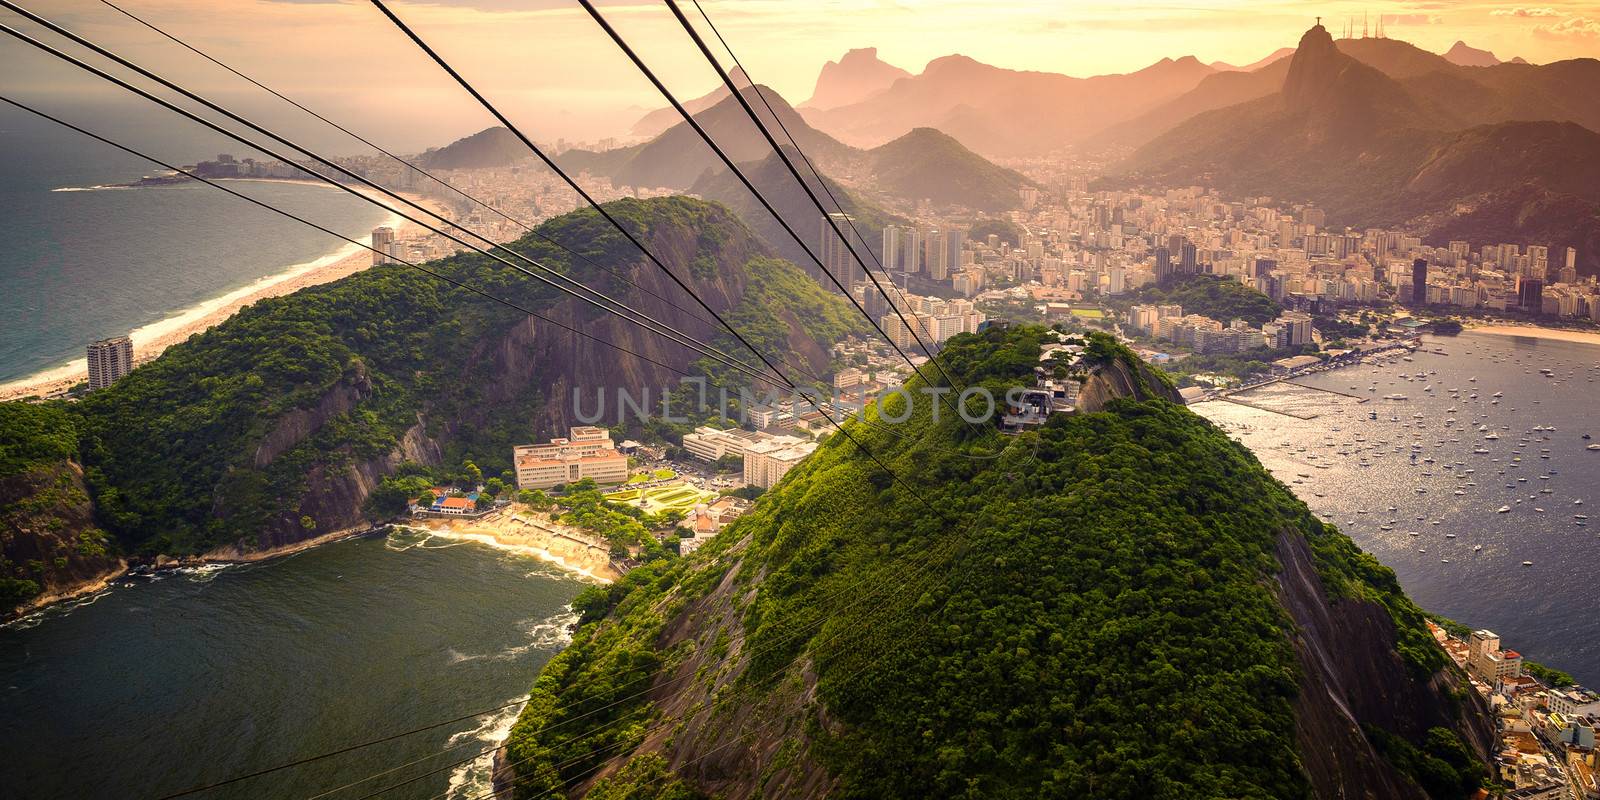 Cable car approaching Sugarloaf Mountain, Urca, Rio de Janeiro, Brazil